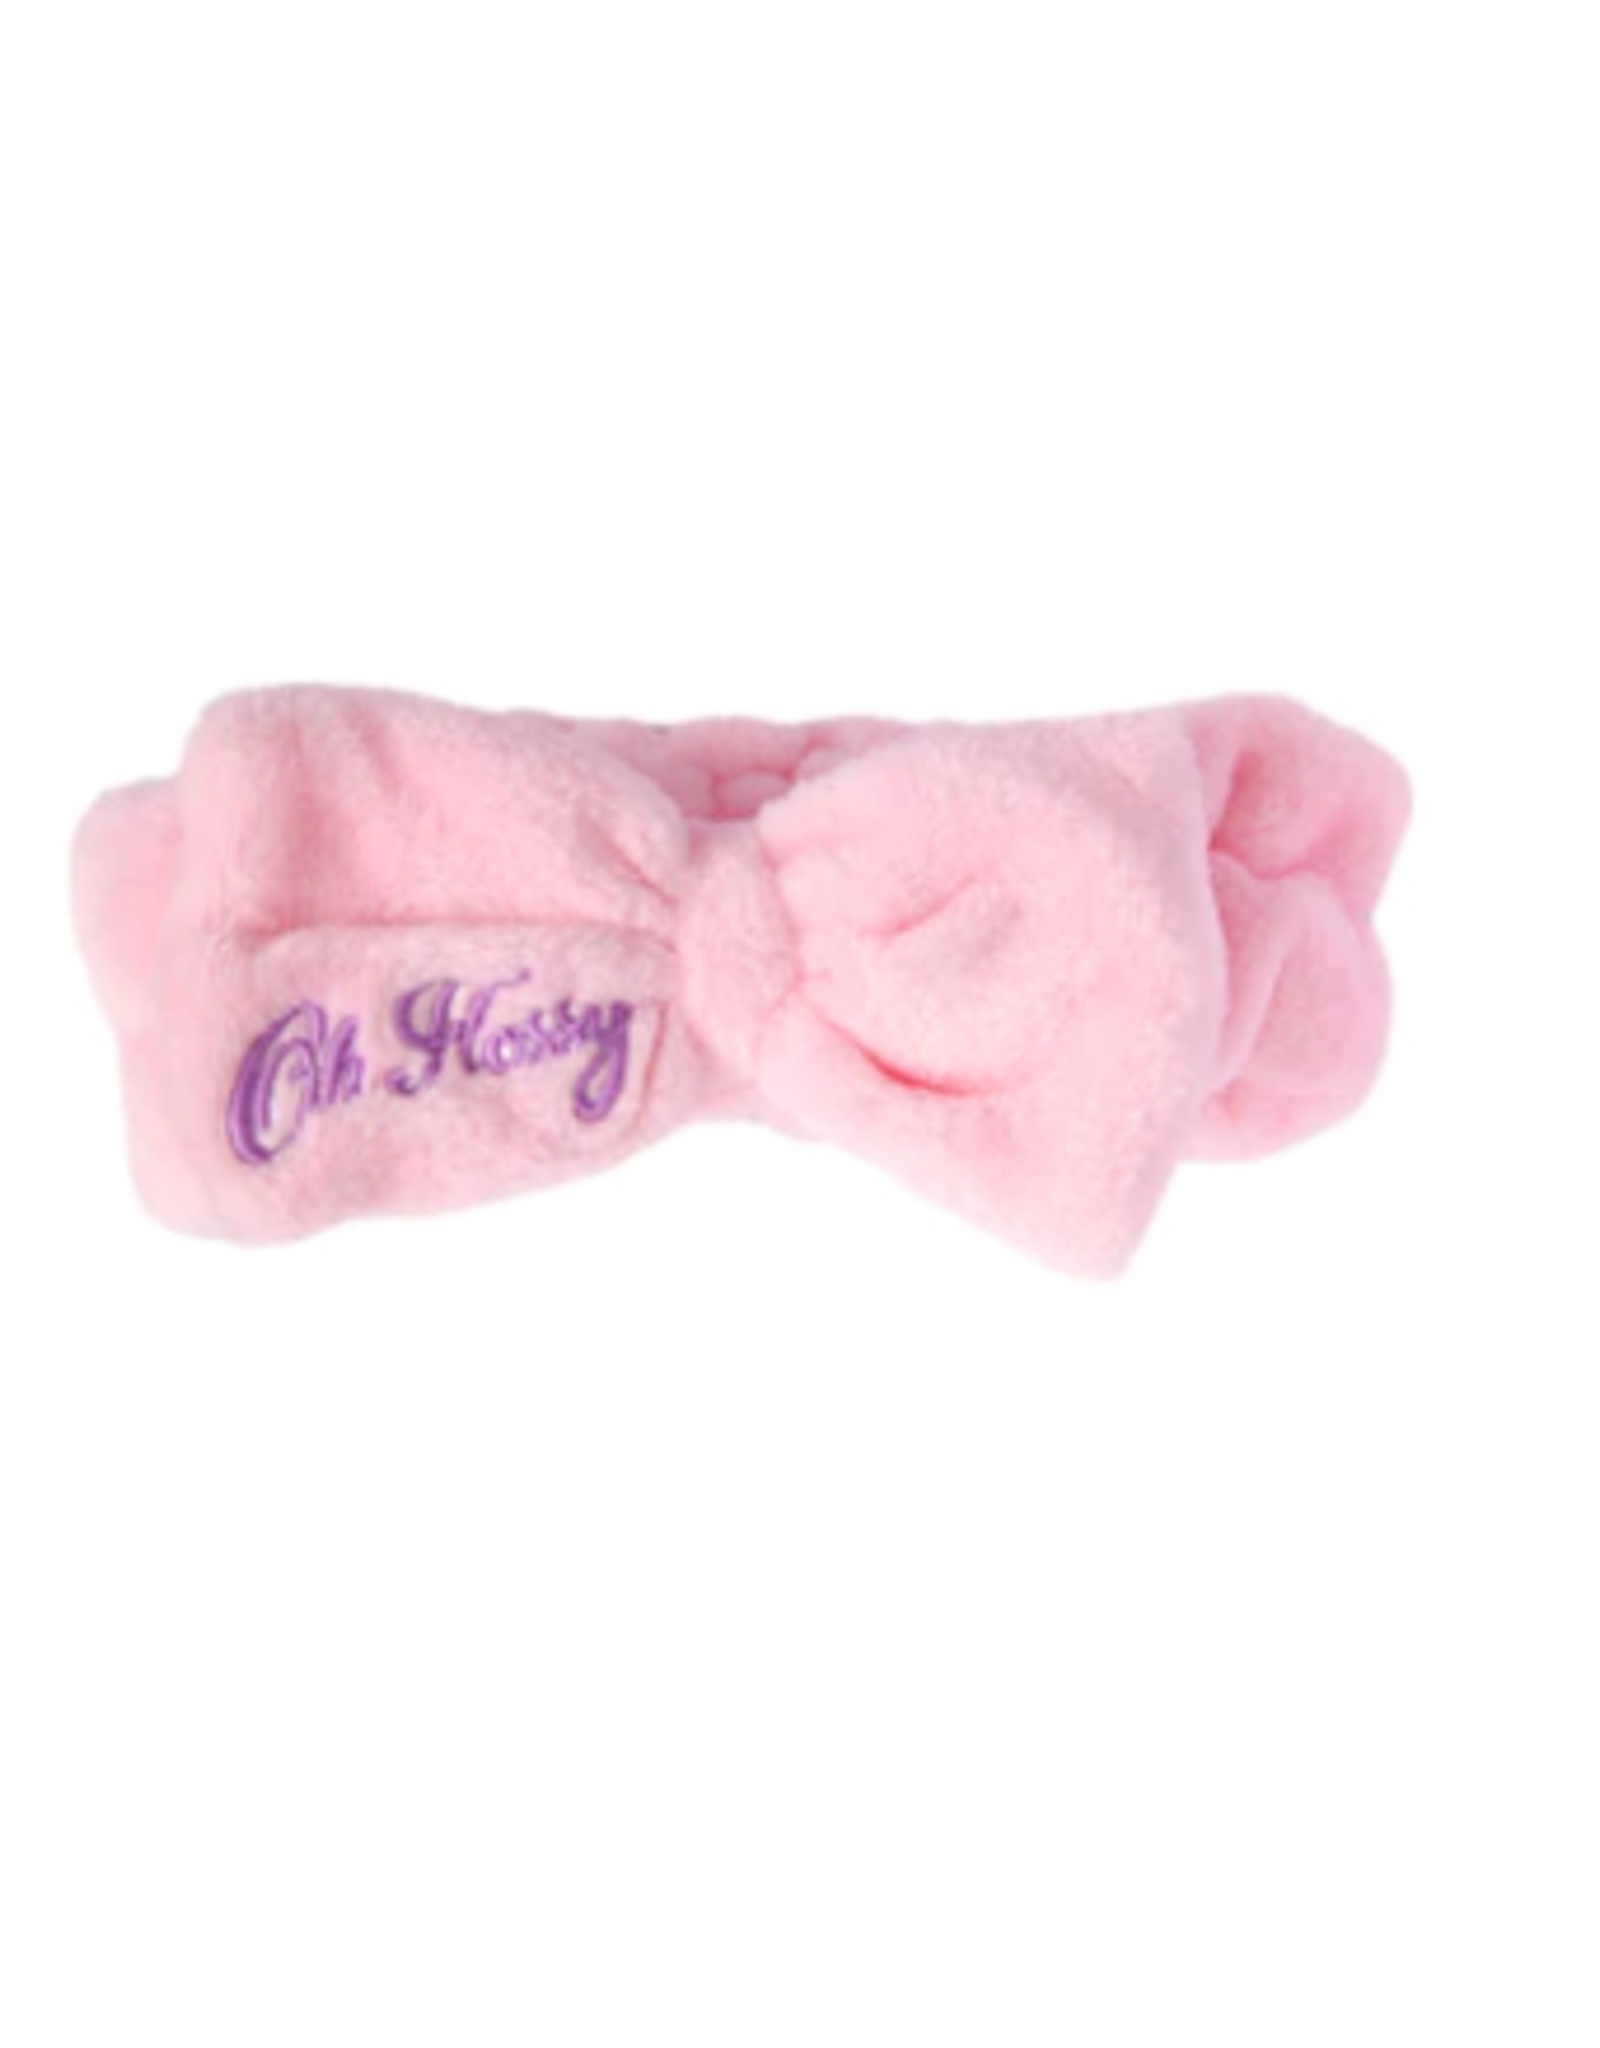 Oh Flossy Oh Flossy - Cosmetic Headband